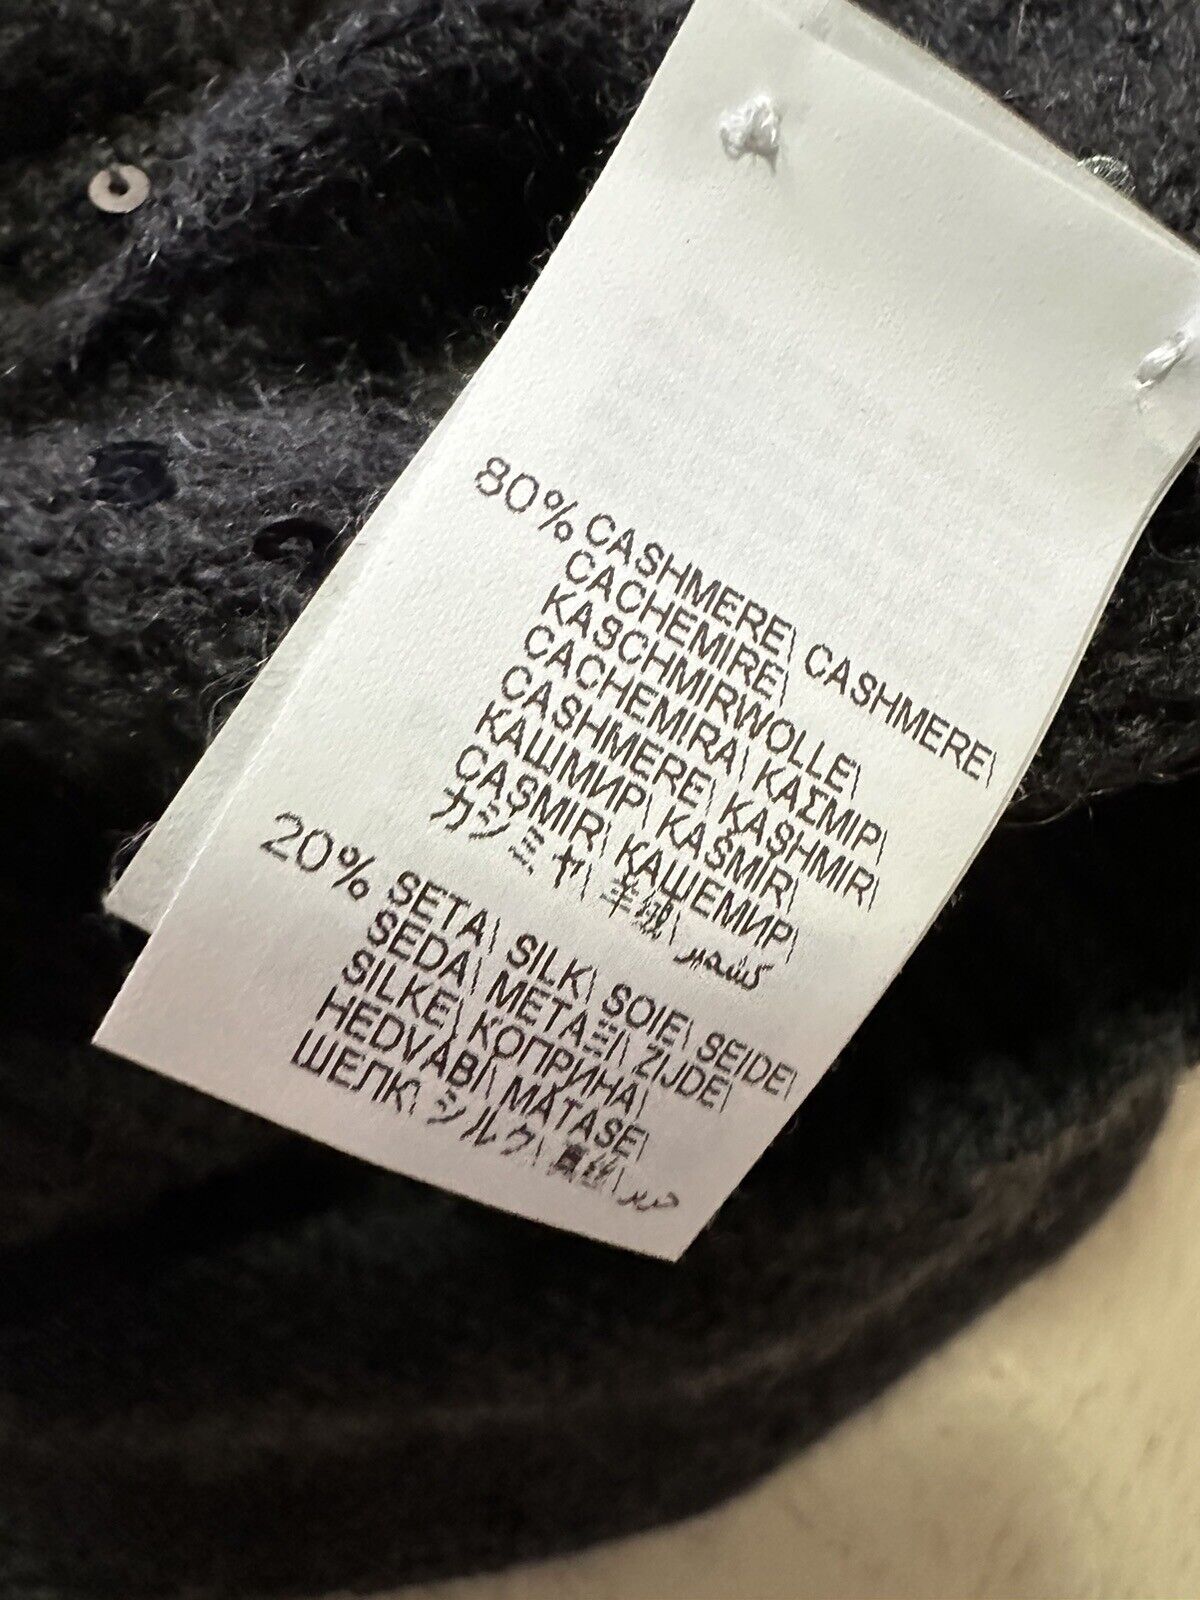 New $4495 Brunello Cucinelli Cashmere Blend Sweater Dress BLACK STONE Size S